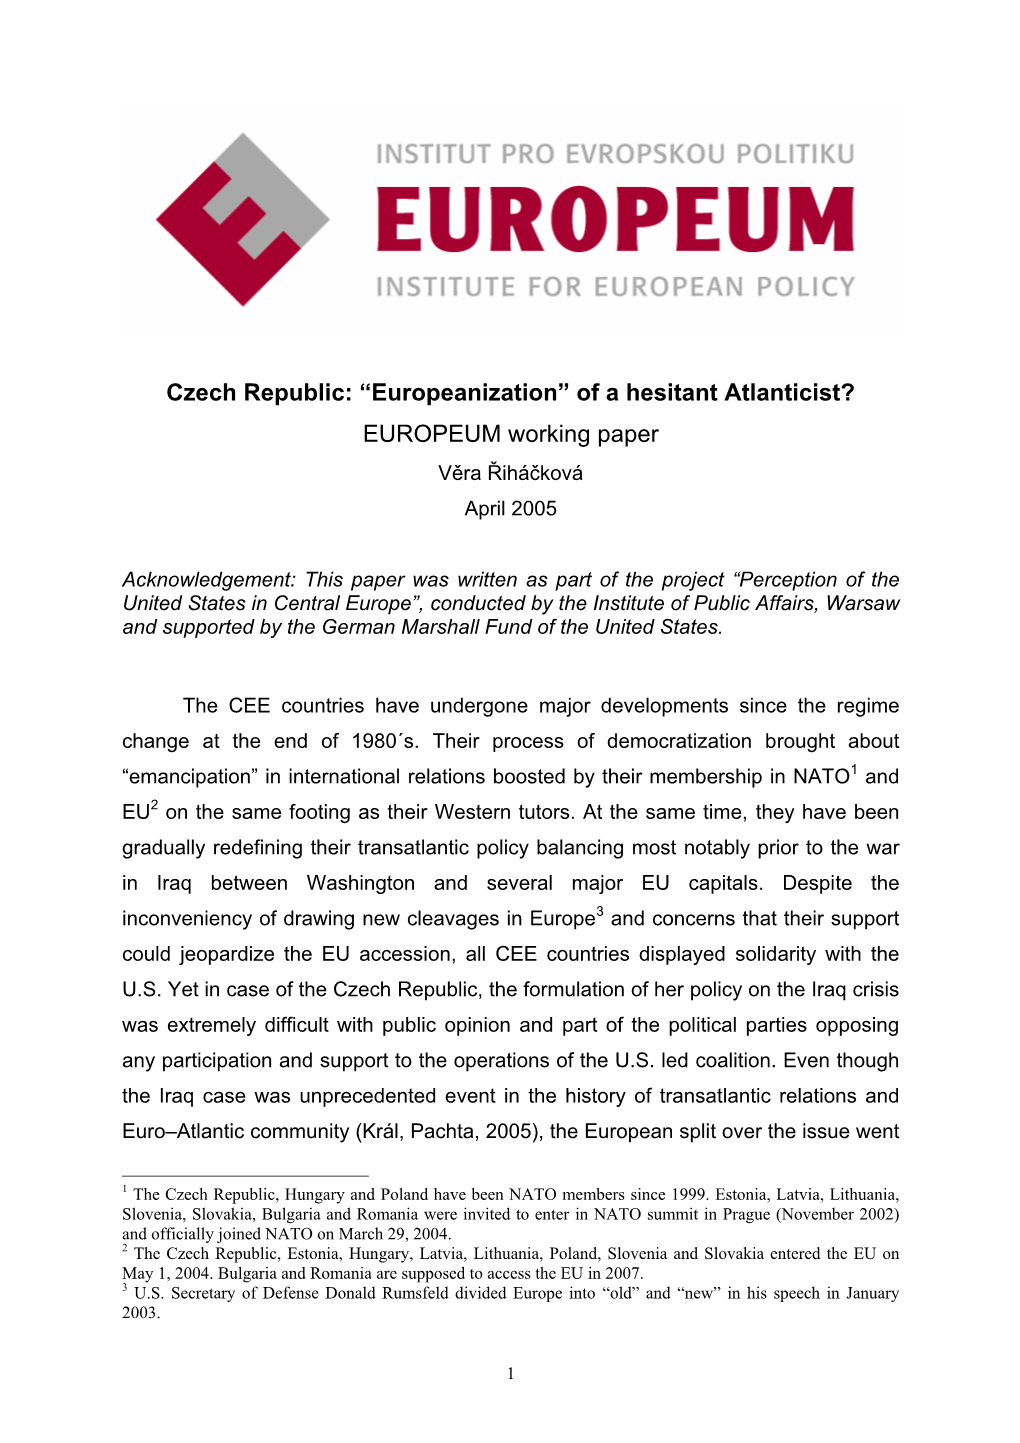 Czech Republic: “Europeanization” of a Hesitant Atlanticist? EUROPEUM Working Paper Věra Řiháčková April 2005